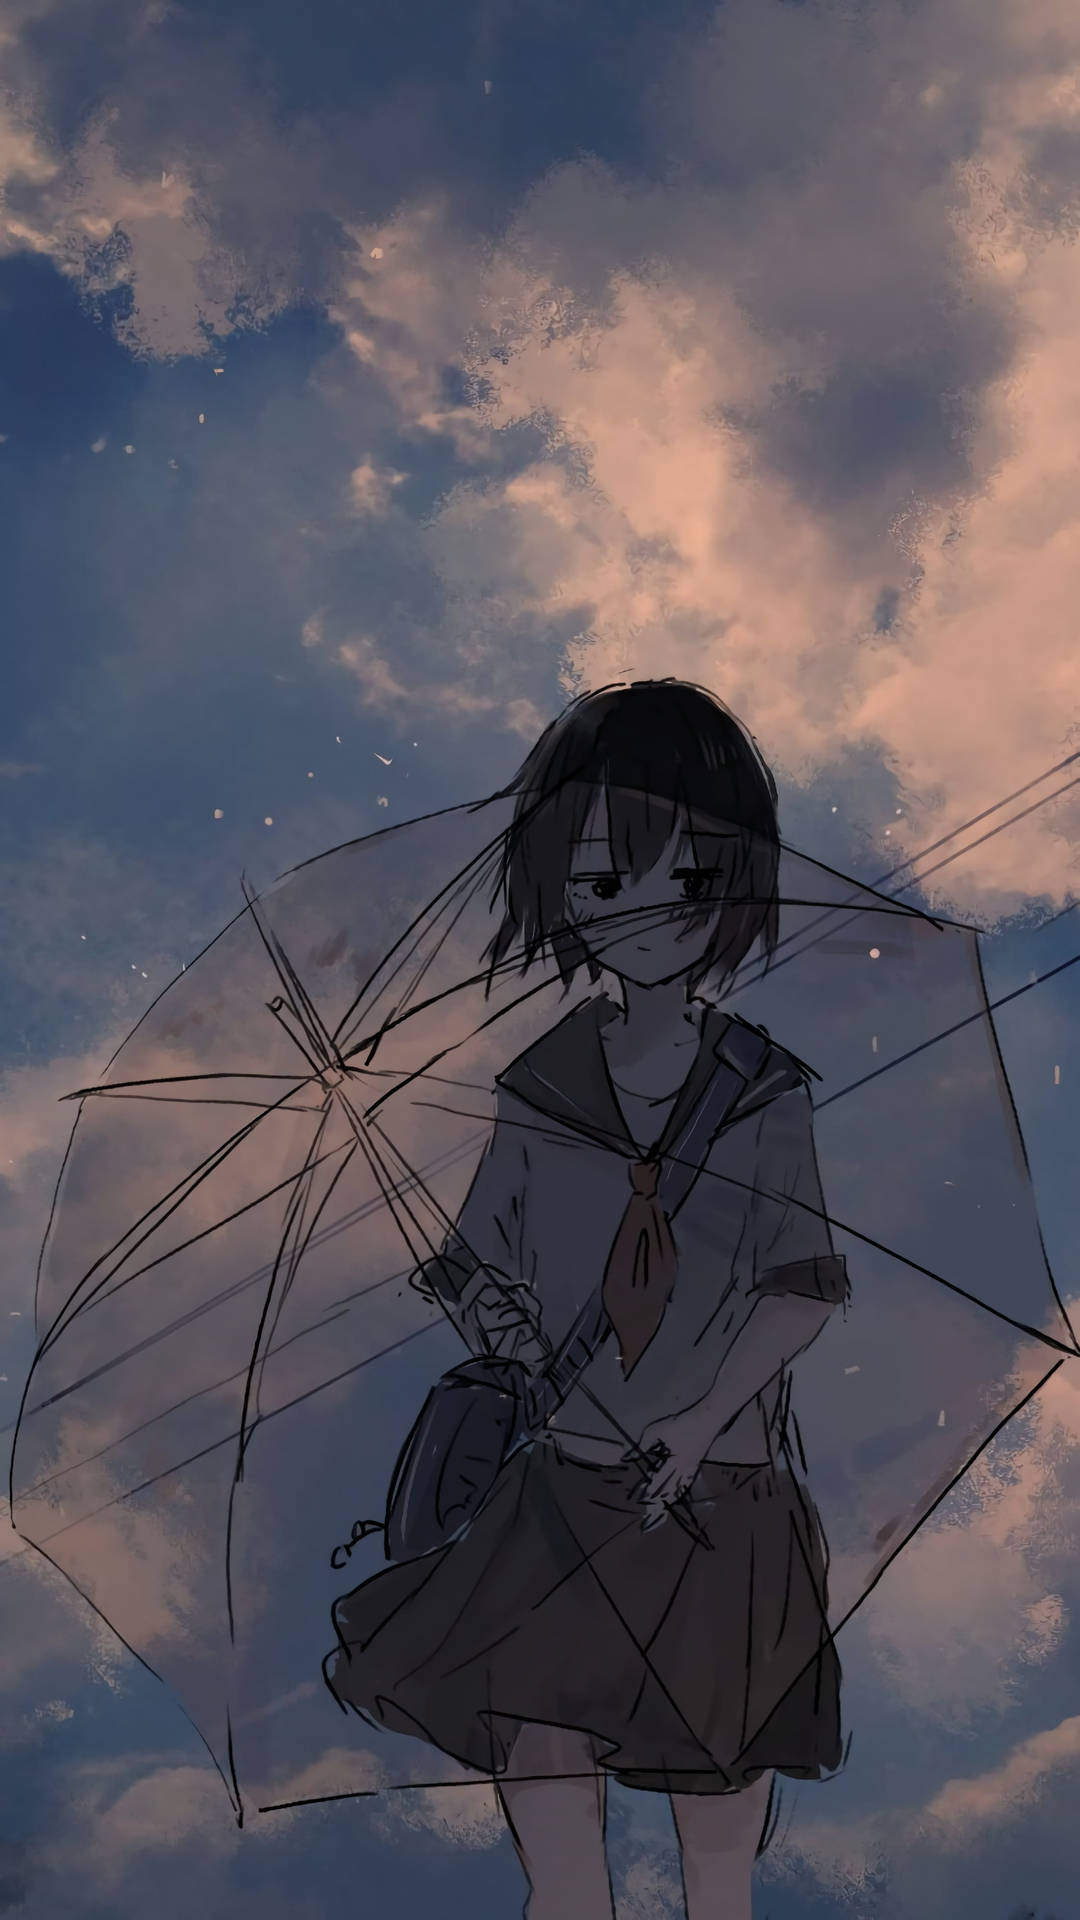 Download Sad Aesthetic Anime Girl With Umbrella Wallpaper 